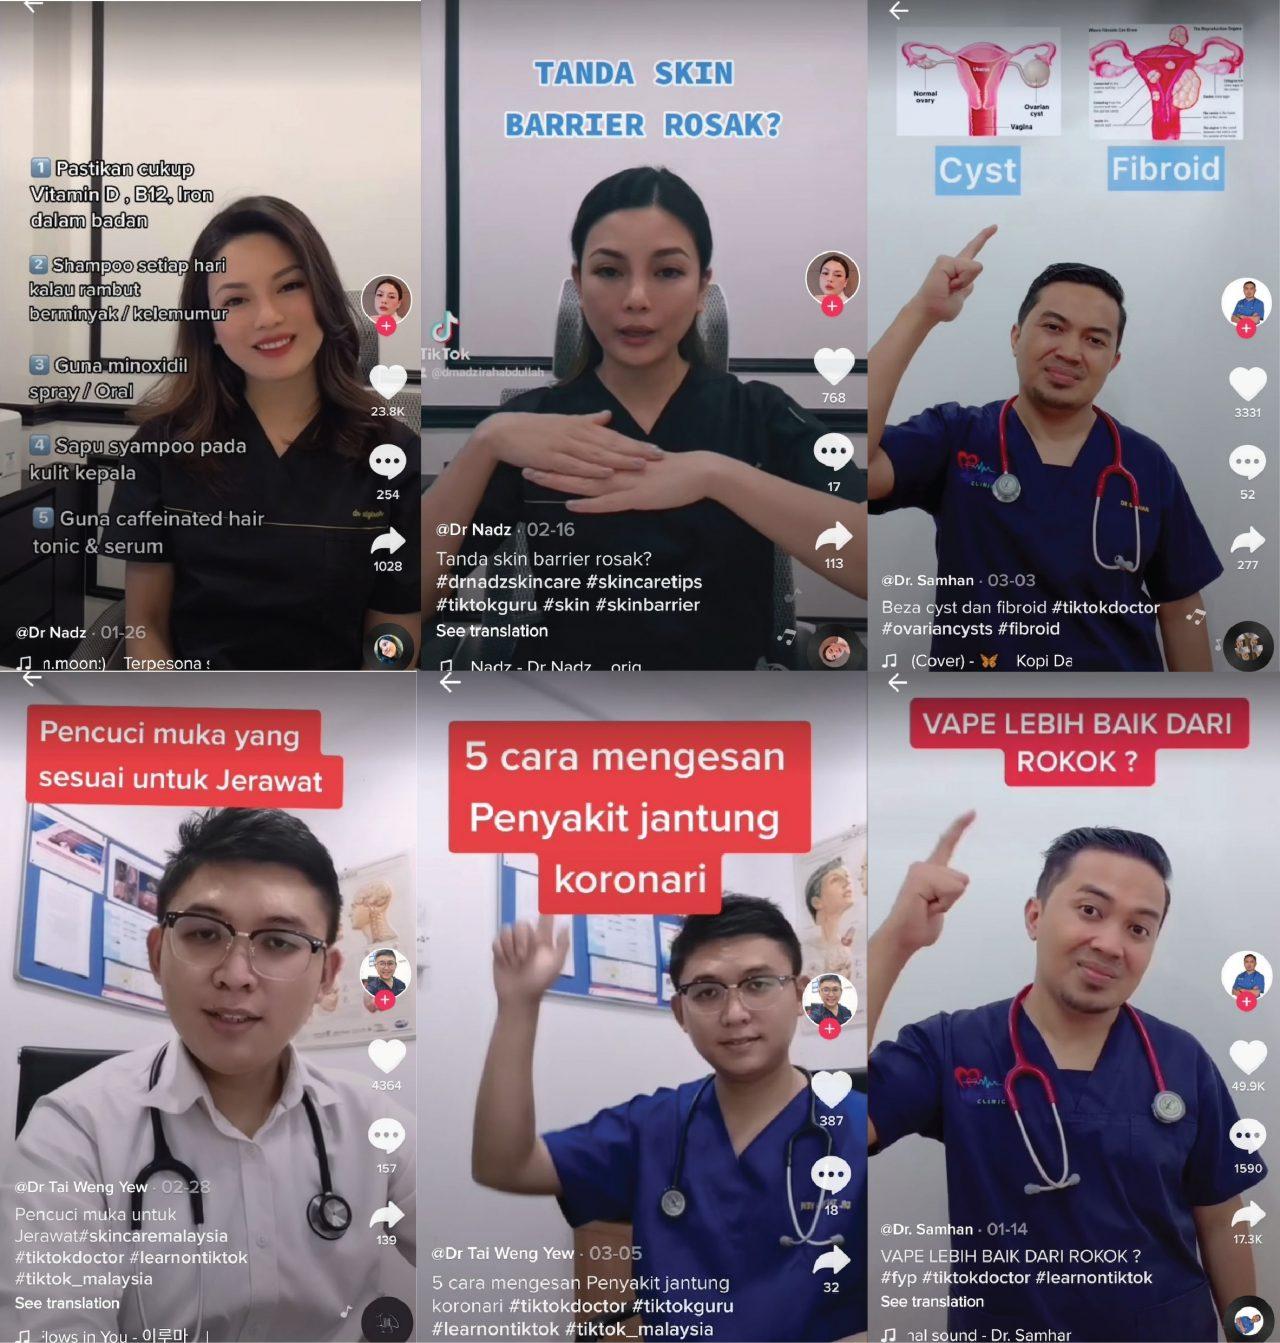 A compilation of screenshots showing Dr Nadzirah Abdullah, Dr Samhan Awang and Dr Tai Weng Yew offering medical advice and tips on video-sharing platform TikTok.